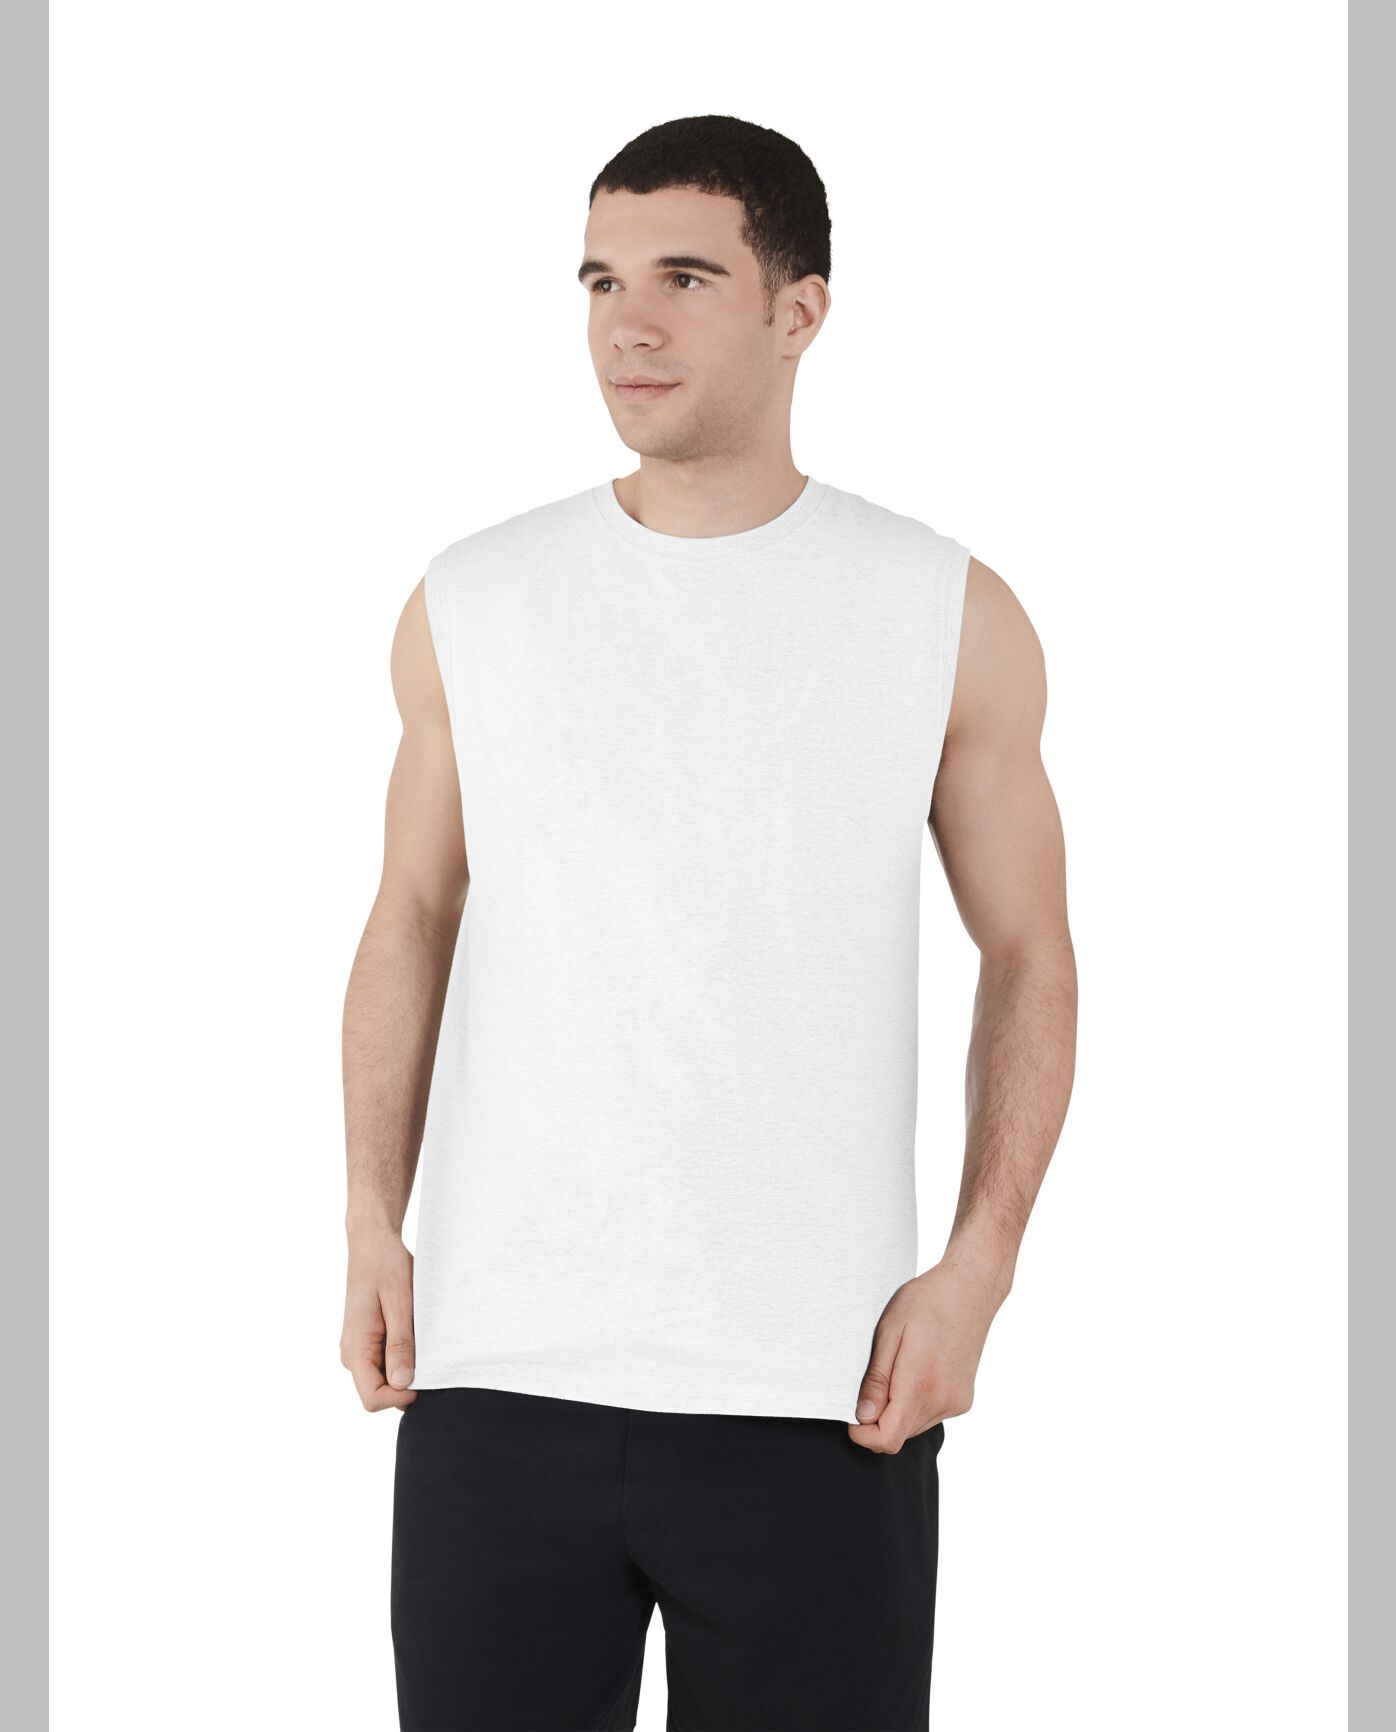 Men's Sleeveless Workout Shirts Quick Dry Athletic Tanks - Heather Dark  Blue / S